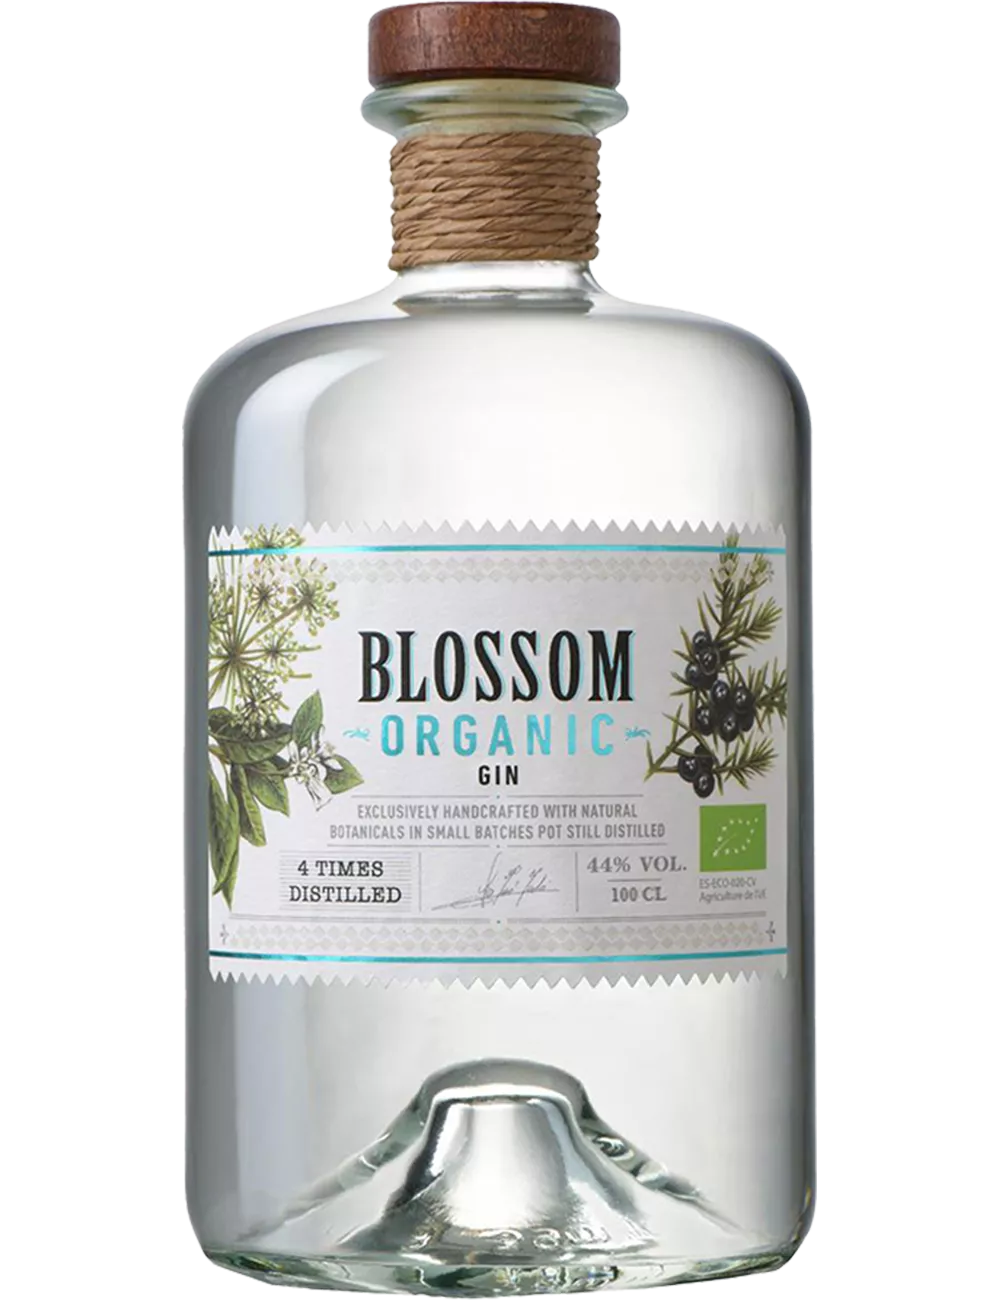 Blossom - Organic Bio - London dry gin